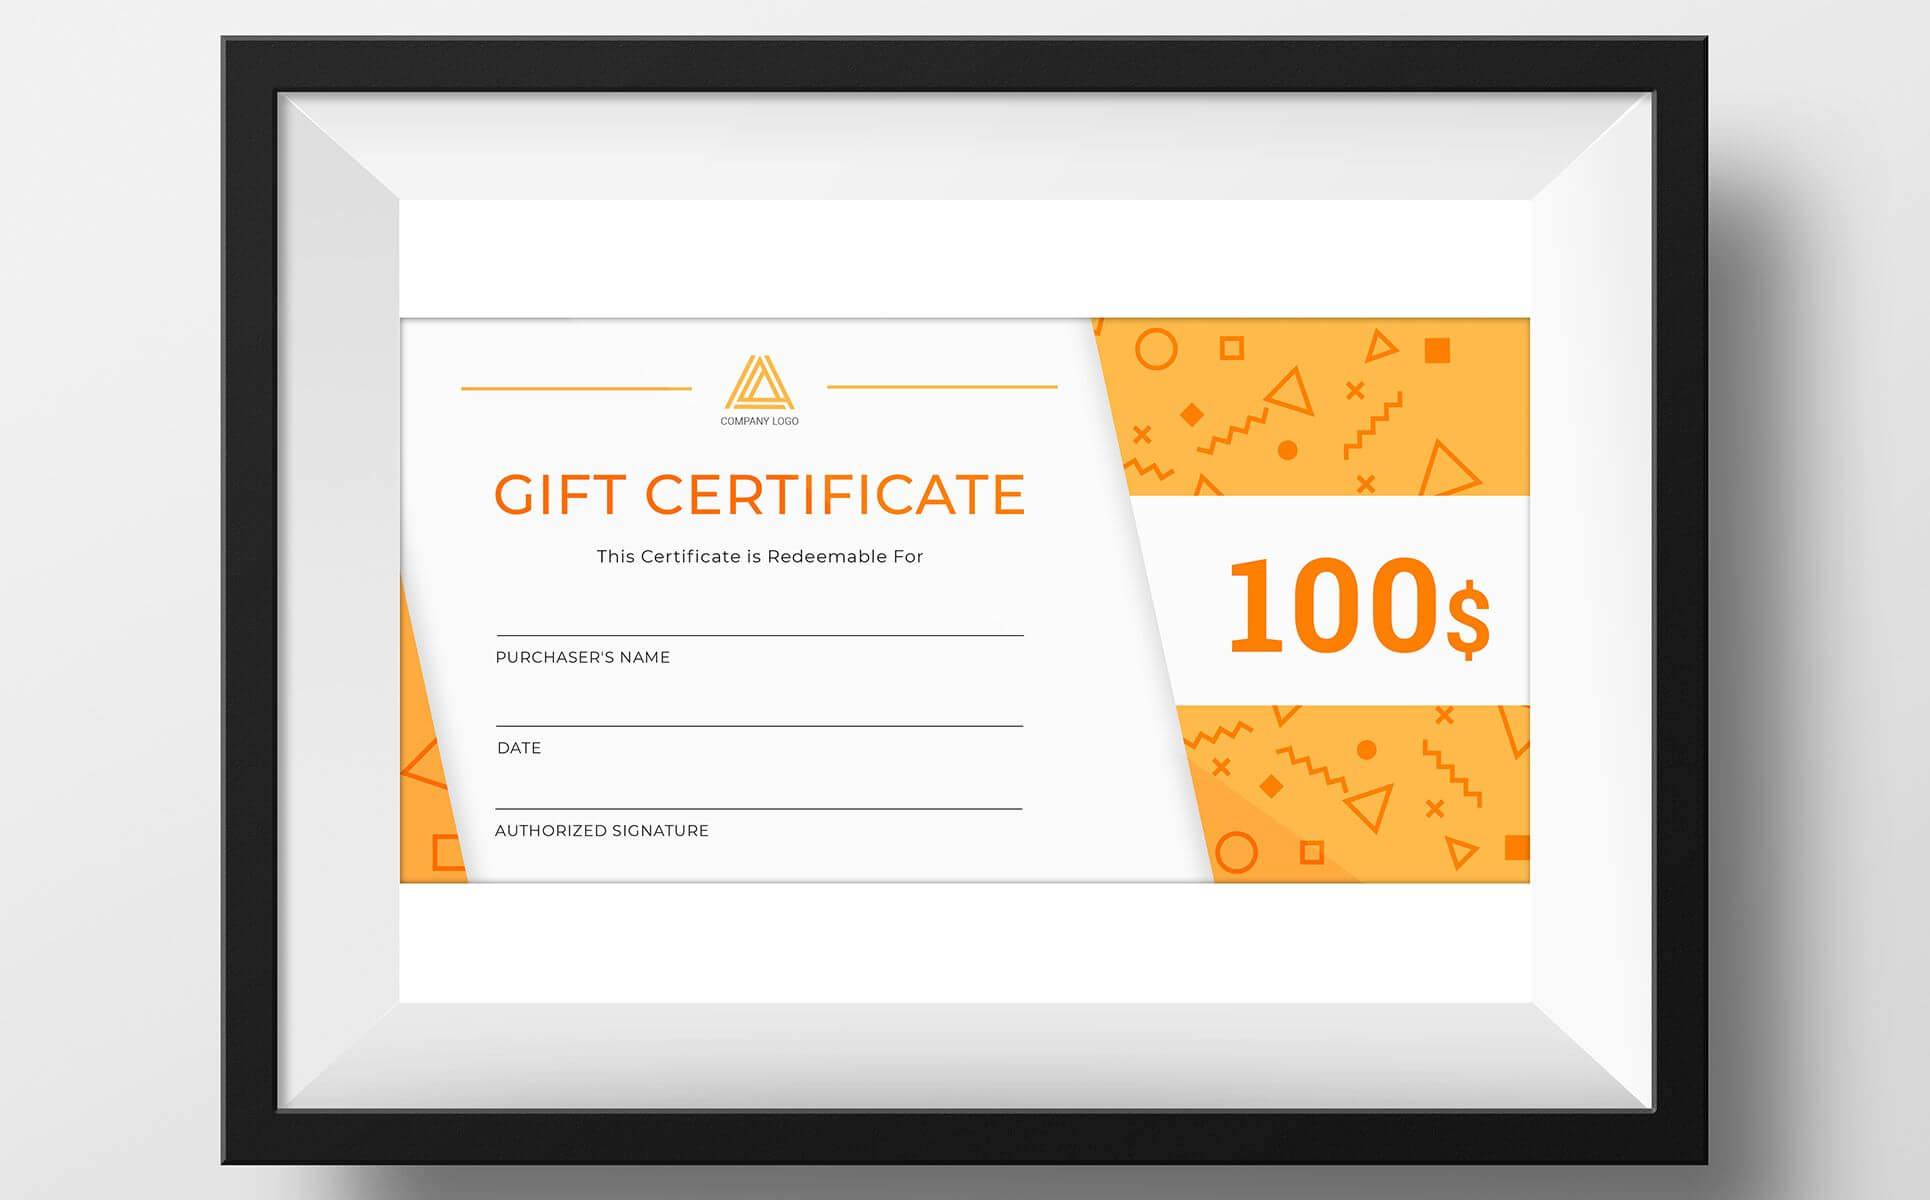 Gift Certificate Template | Design Illustration Art Within Company Gift Certificate Template